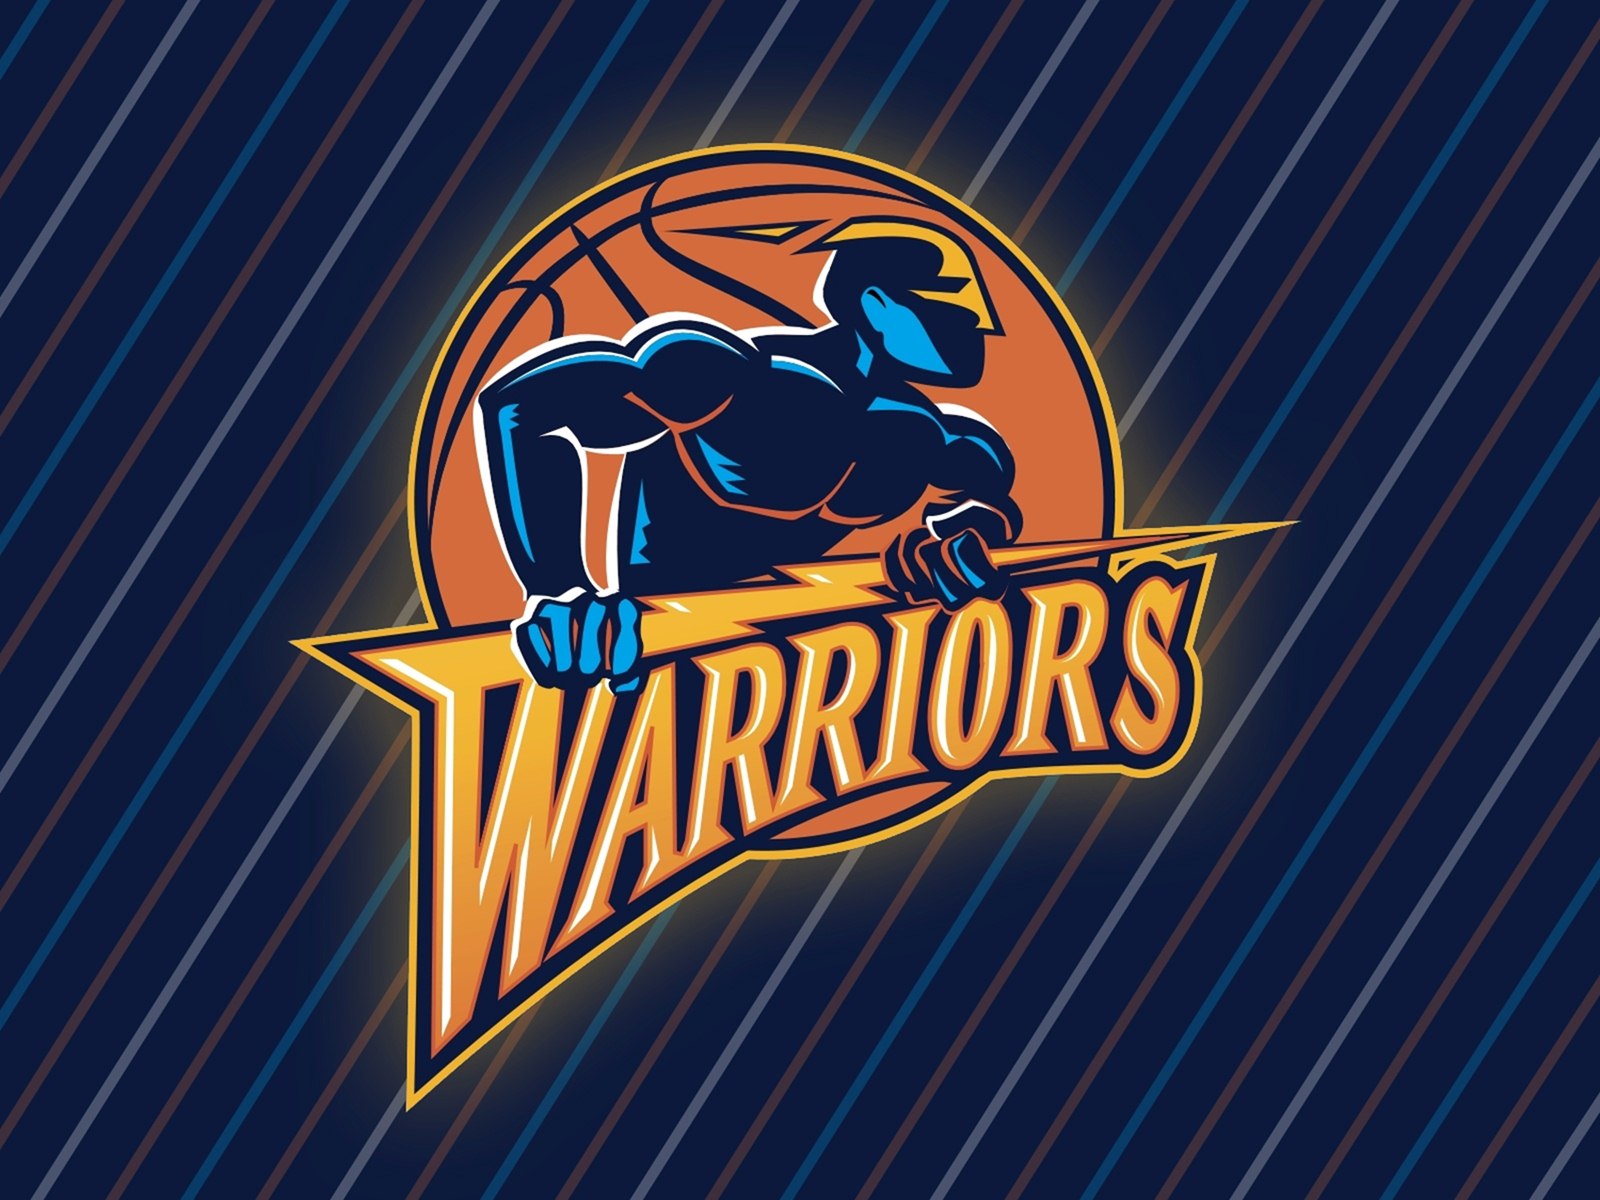 Golden State Warriors Wallpapers HD | PixelsTalk.Net1600 x 1200